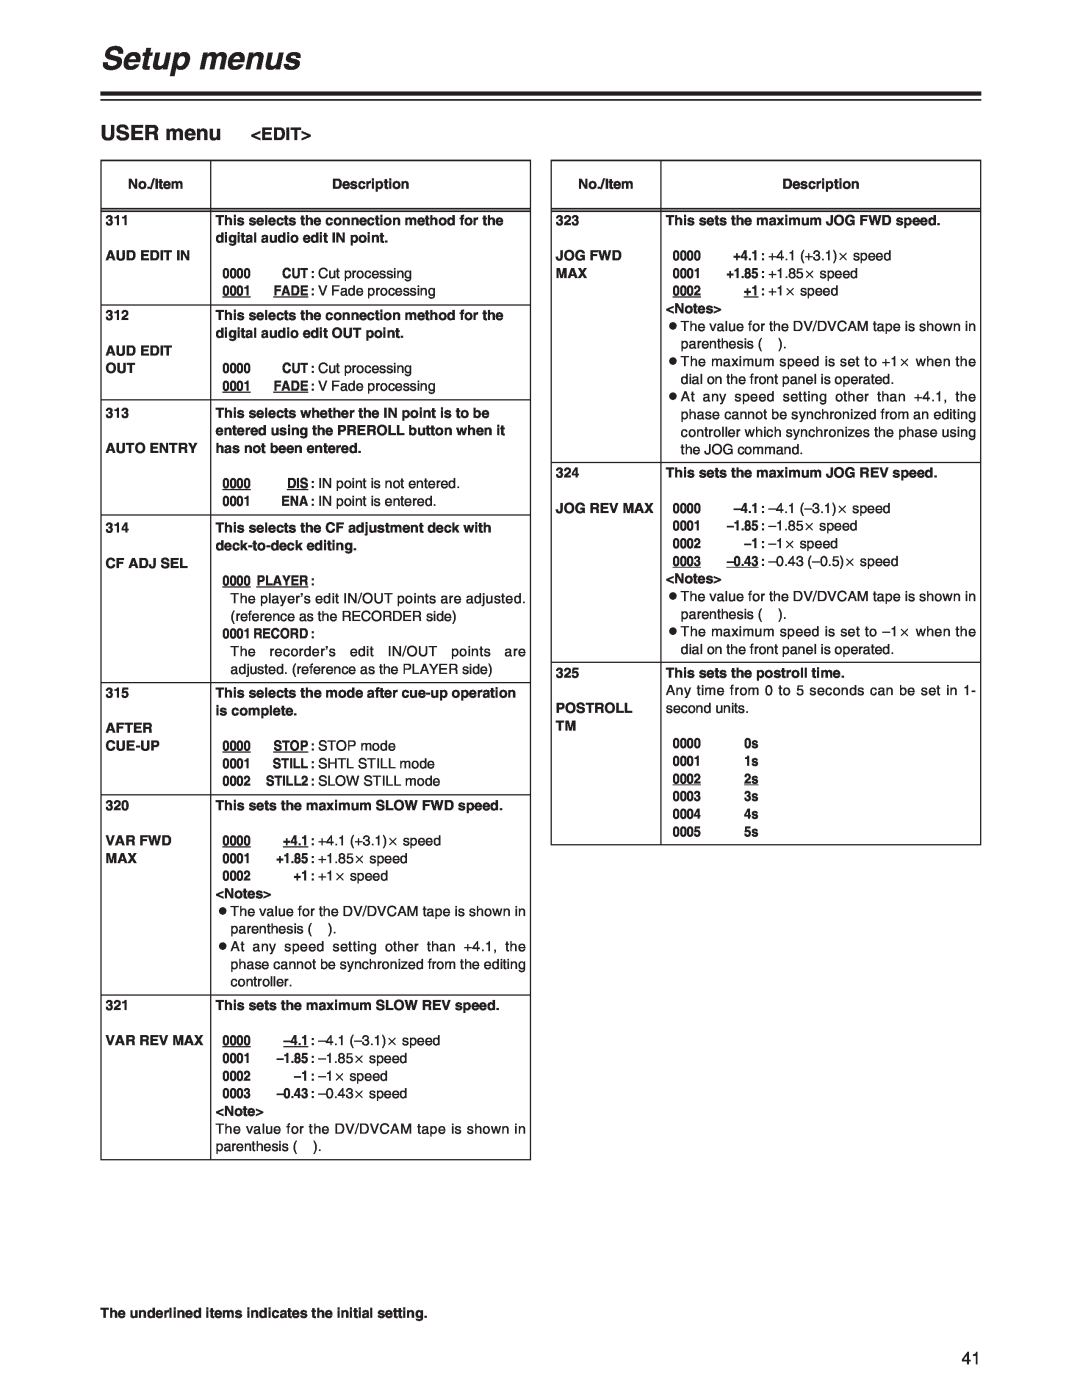 Panasonic AJ-SD755 operating instructions Setup menus, USER menu, Edit 